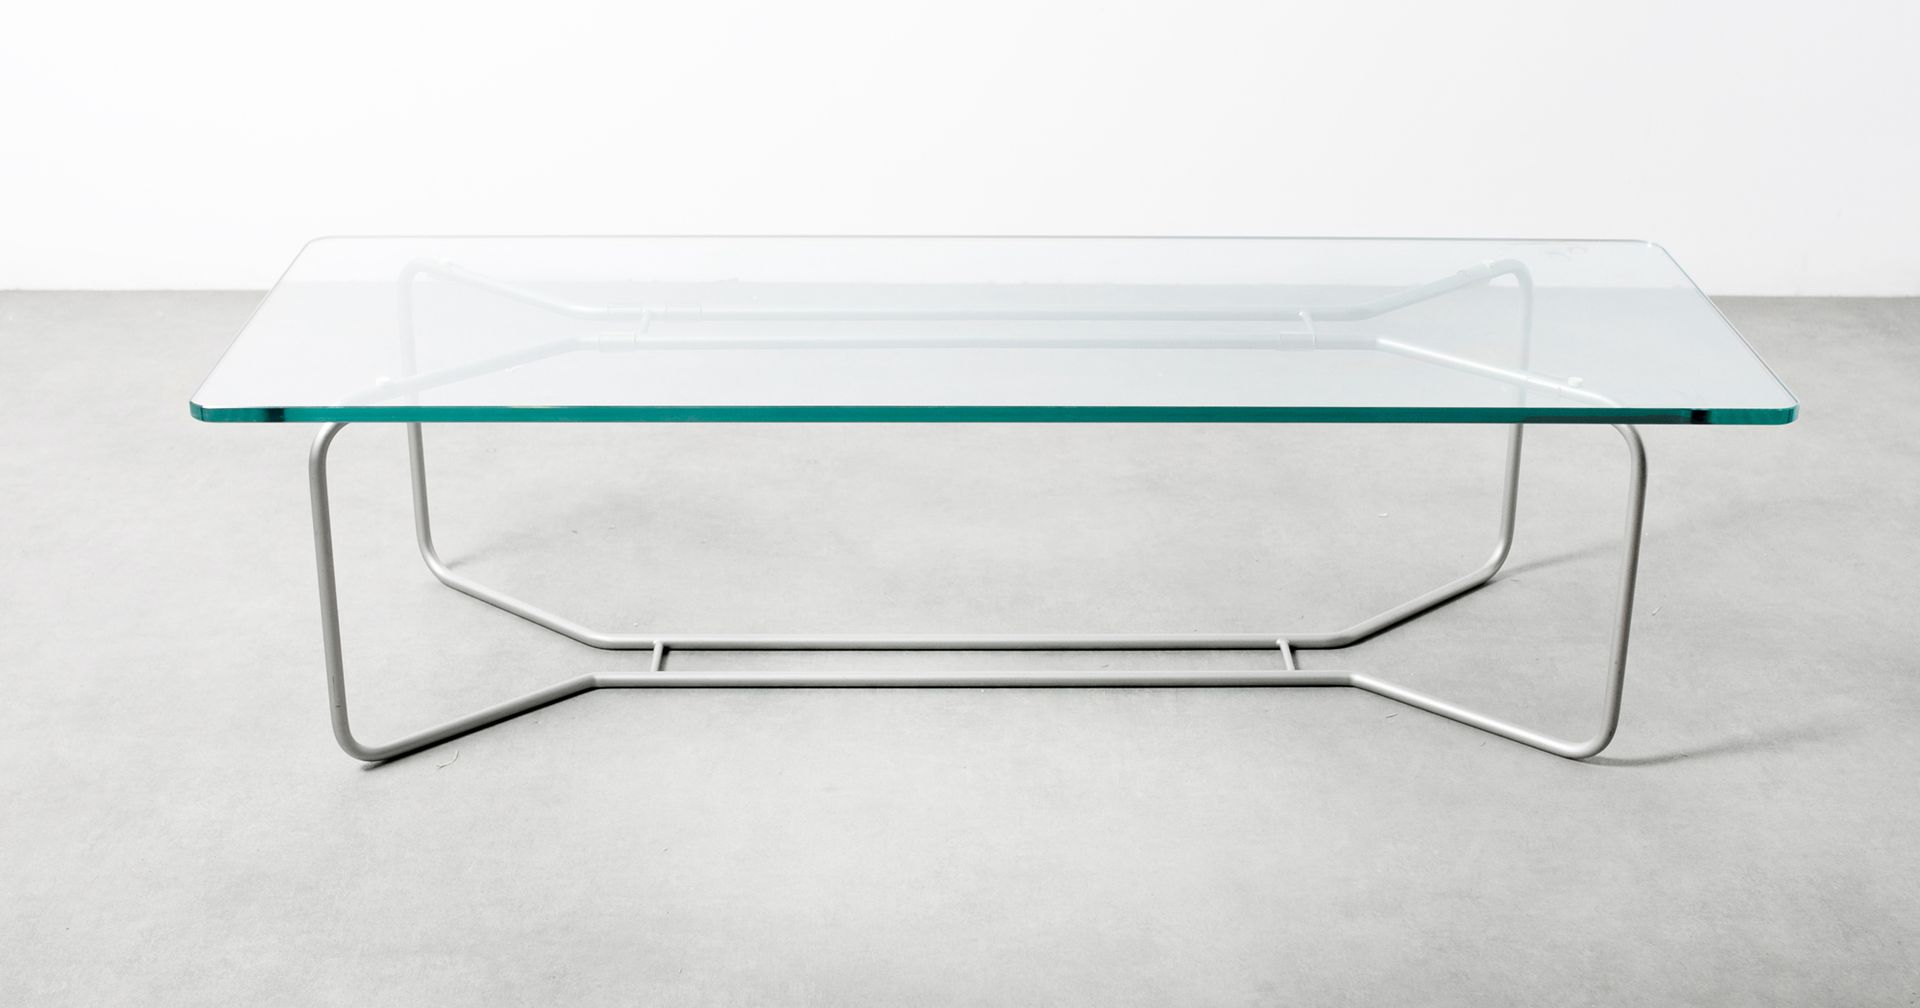 Null 咖啡桌，玻璃桌面放在一个金属底座上。

高_35厘米，宽_130厘米，长_45厘米